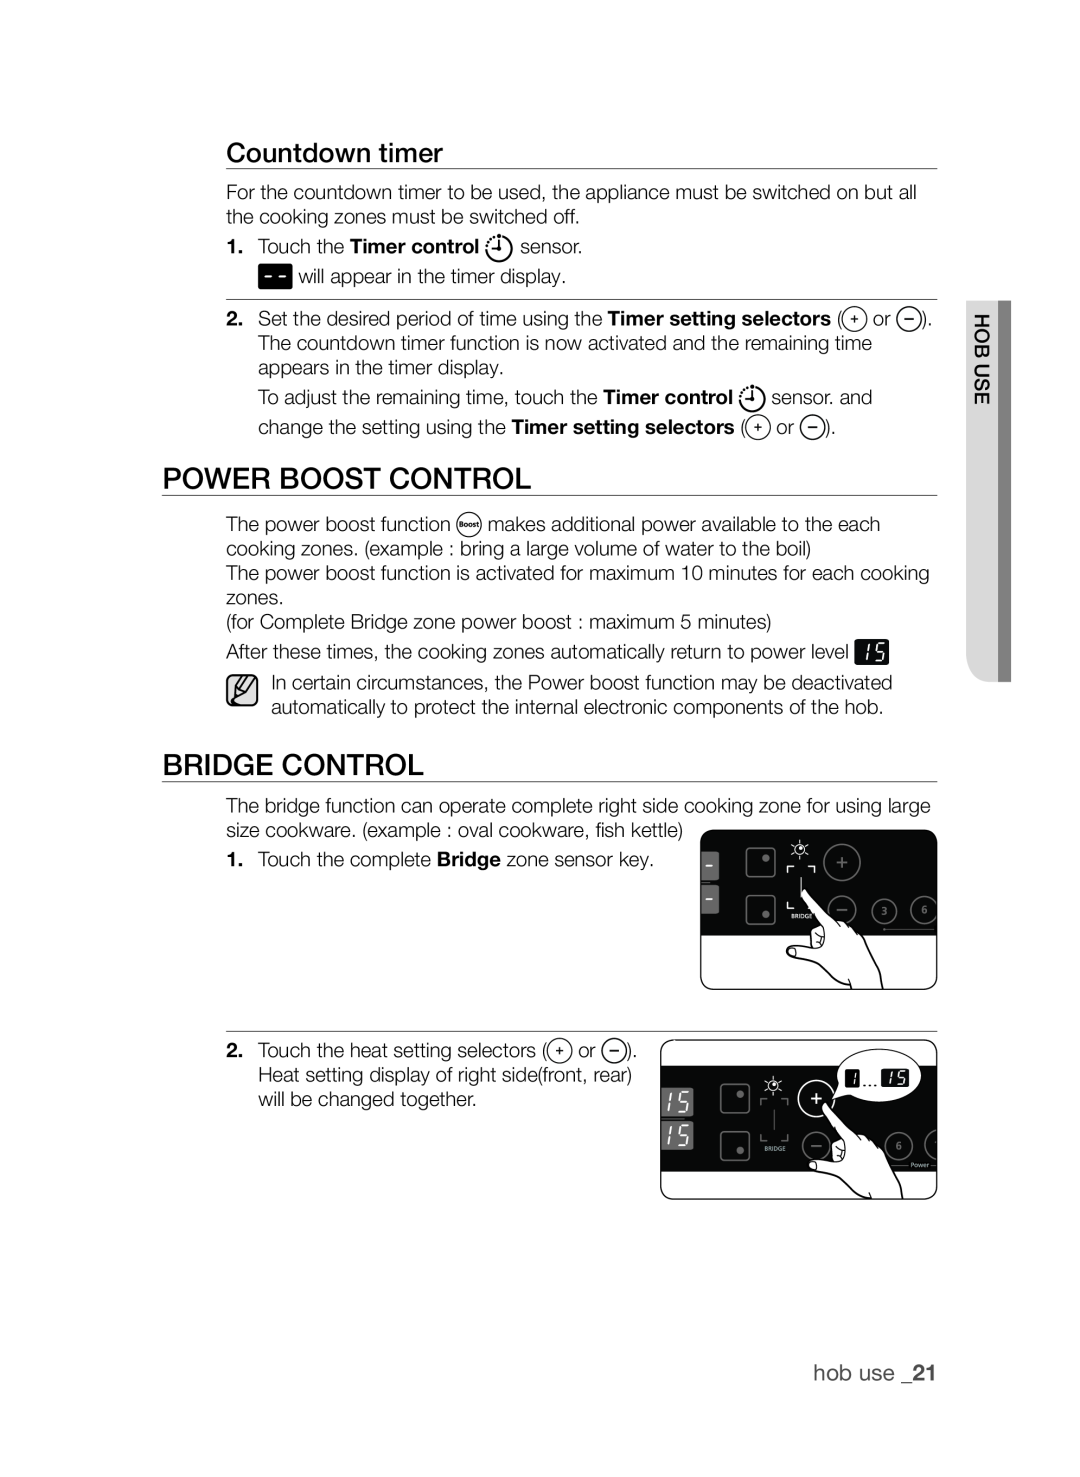 Samsung CTI613GI user manual Power boost control, Bridge Control, Countdown timer, hob use 